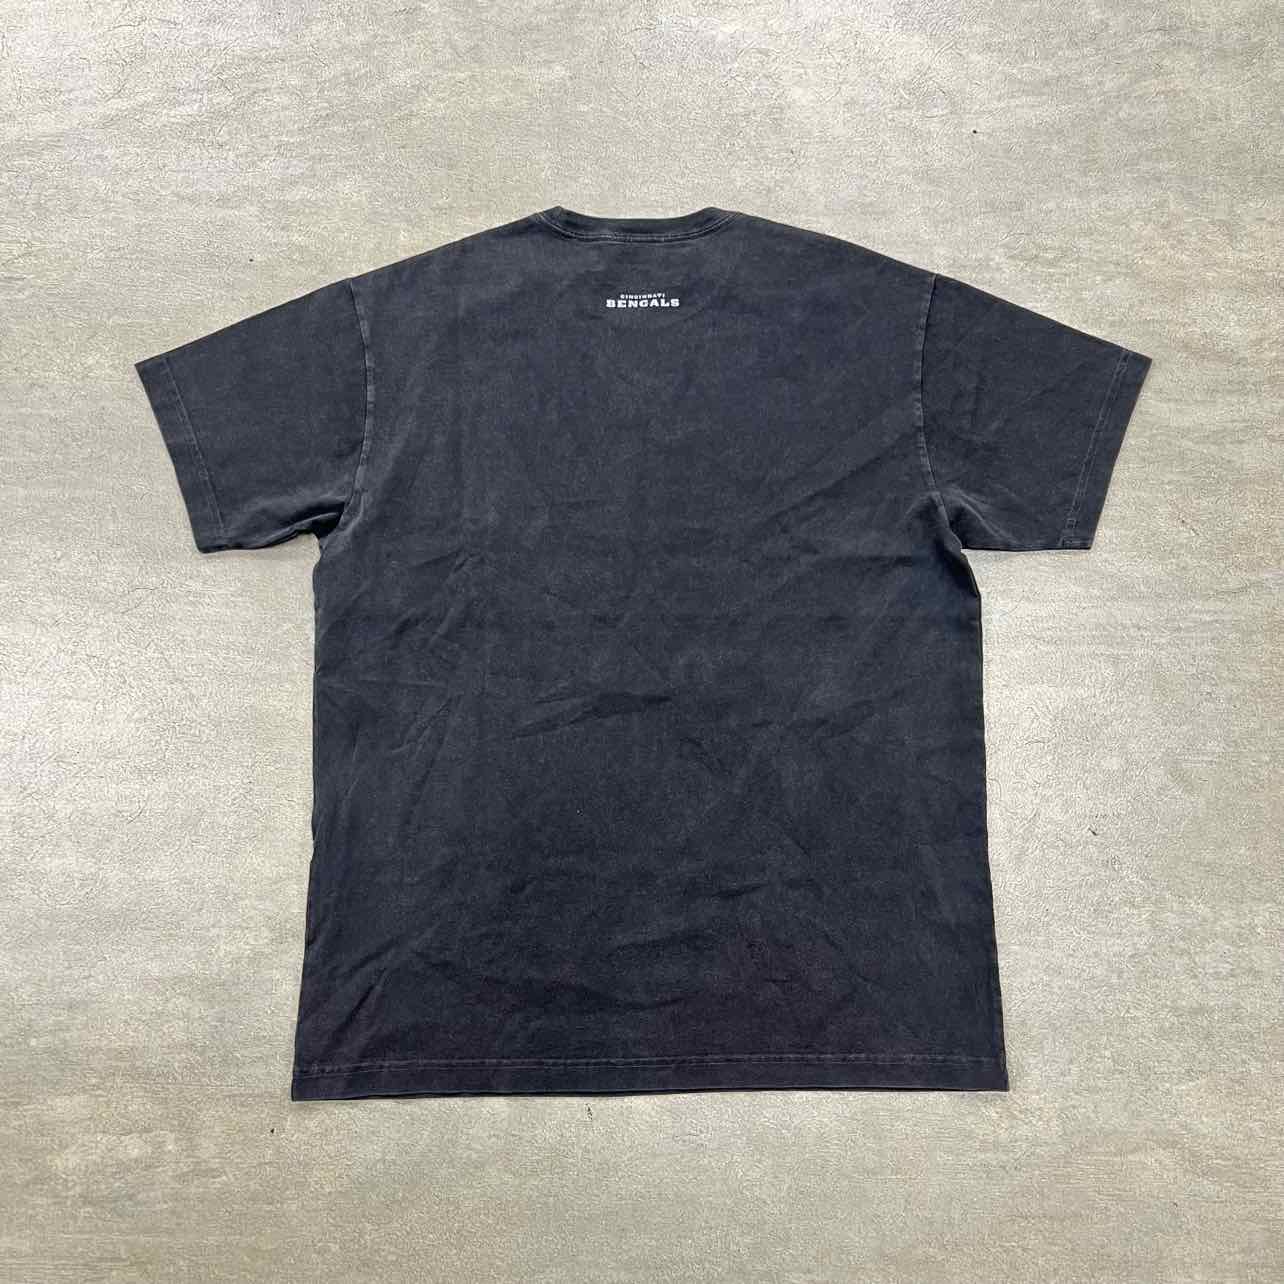 Kith T-Shirt &quot;BENGALS&quot; Black New Size M